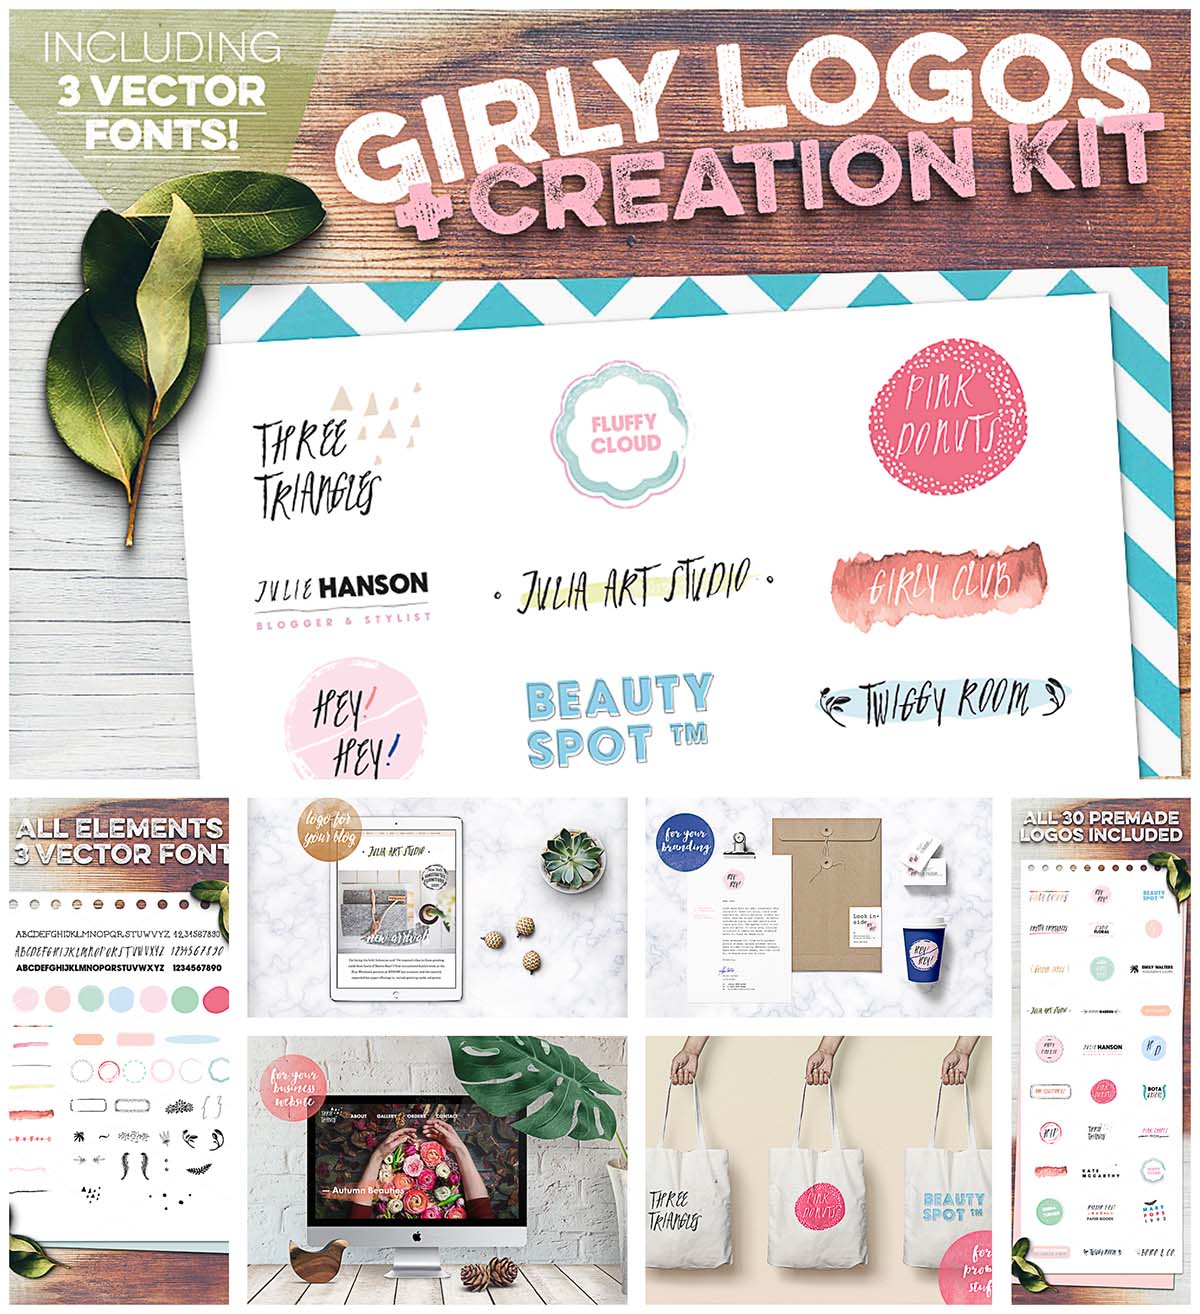 Girly logo business creation kit